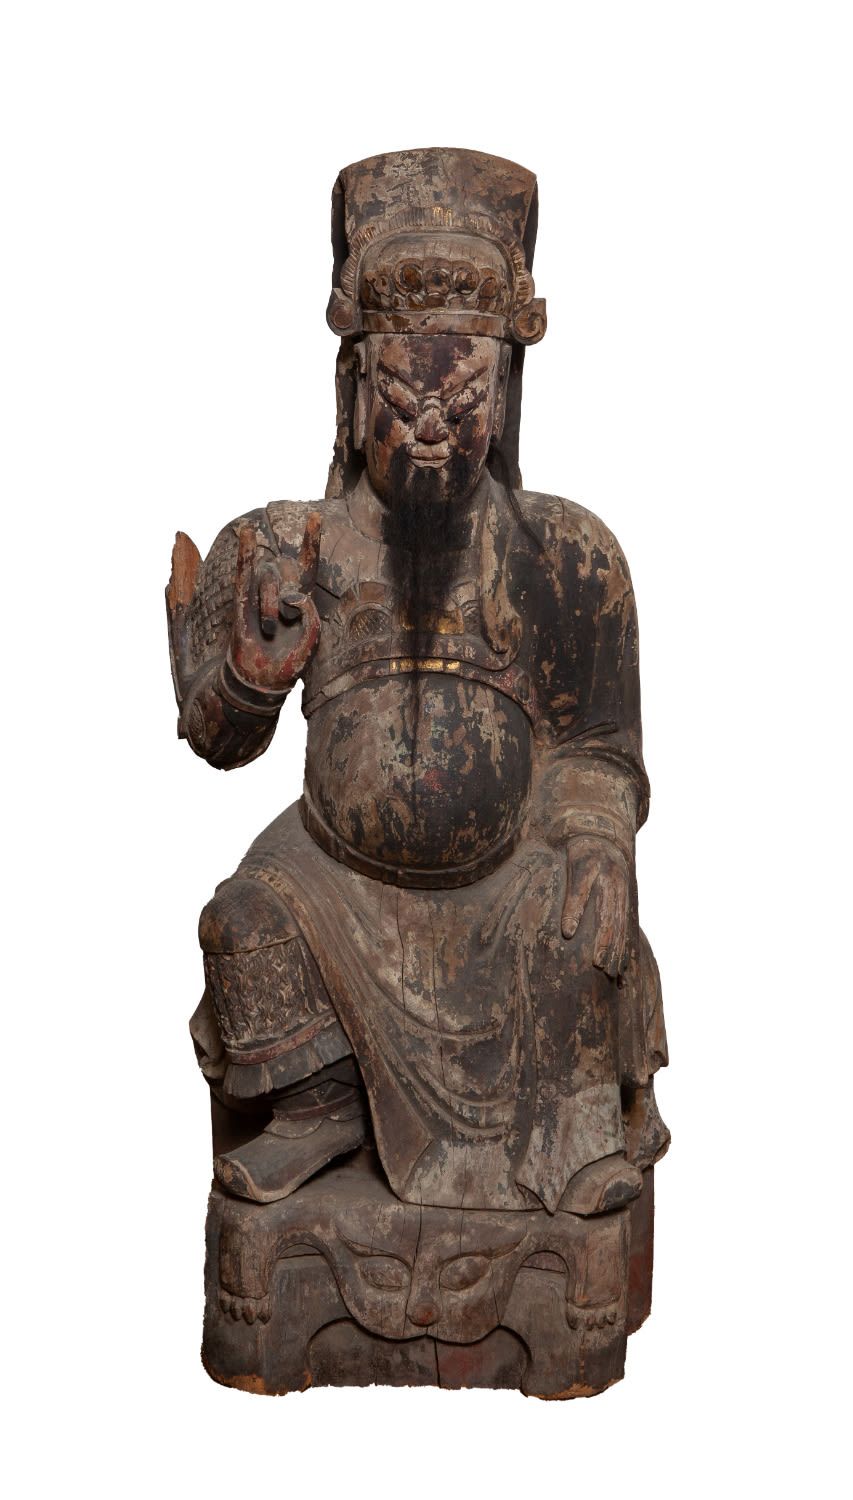 Chinese Qing Dynasty Wood Sculpture Sculpture chinoise en bois du 18e/19e siècle&hellip;